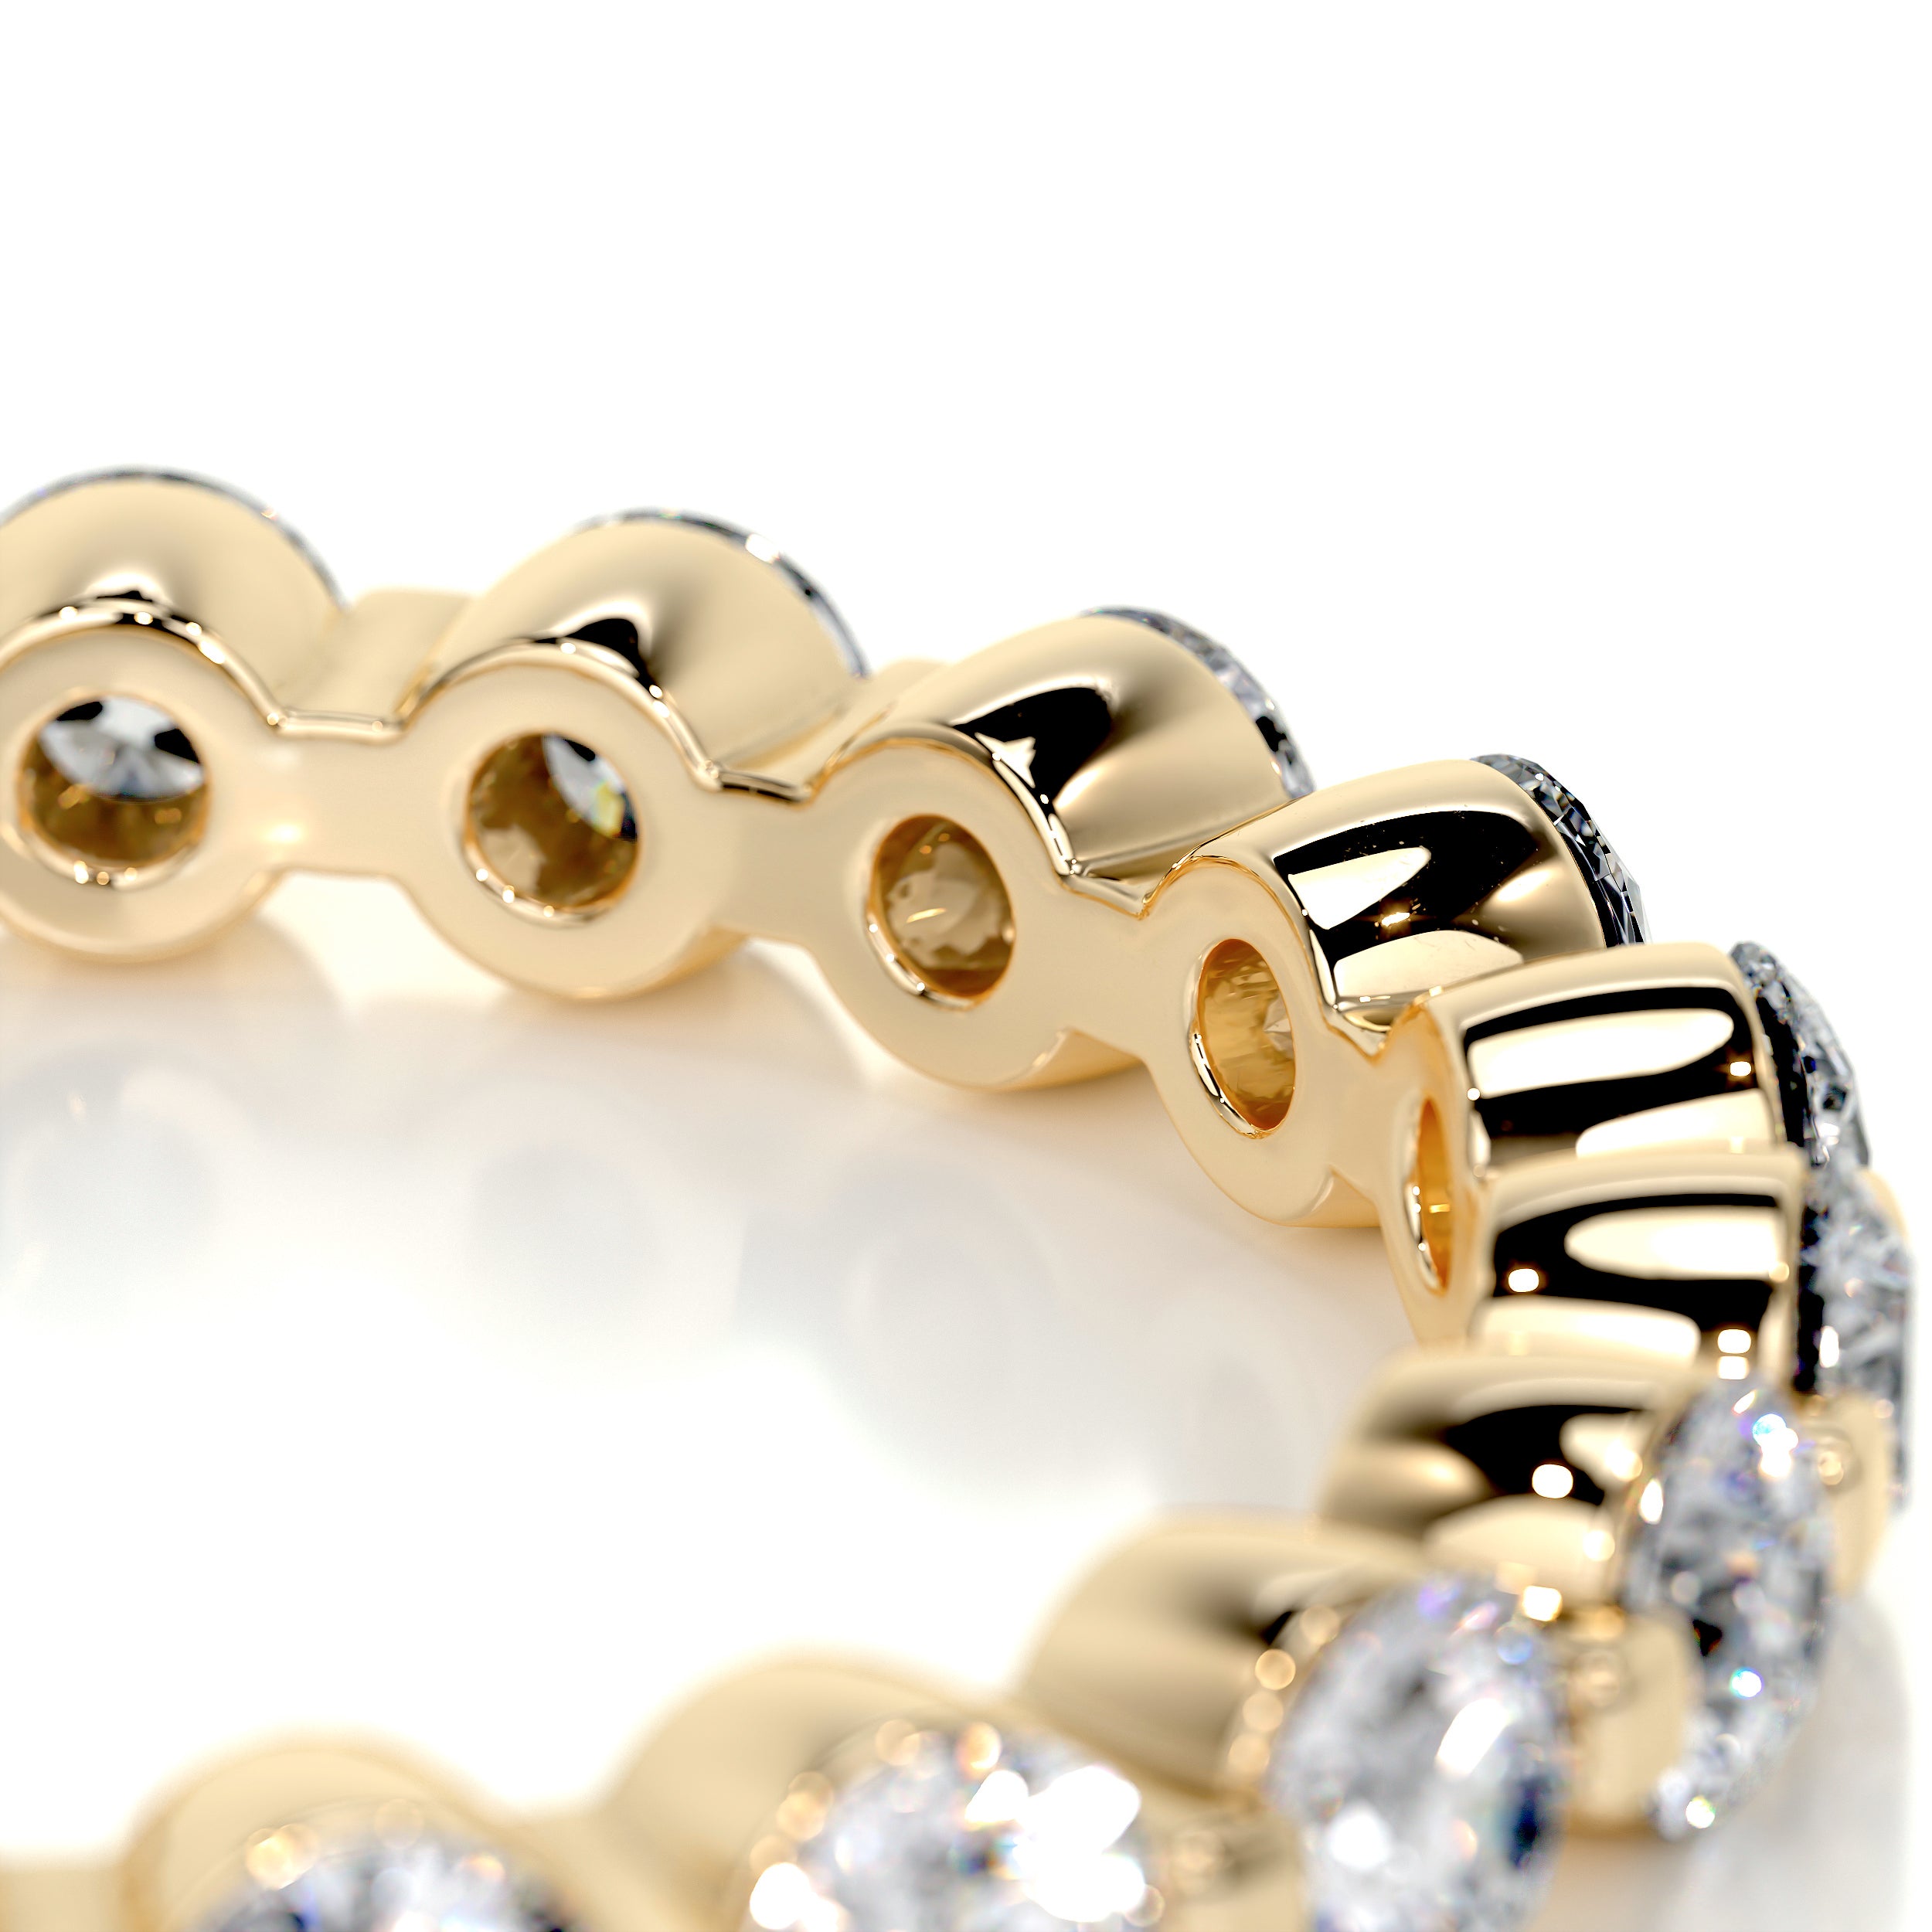 Josie Eternity Wedding Ring   (1.75 Carat) -18K Yellow Gold